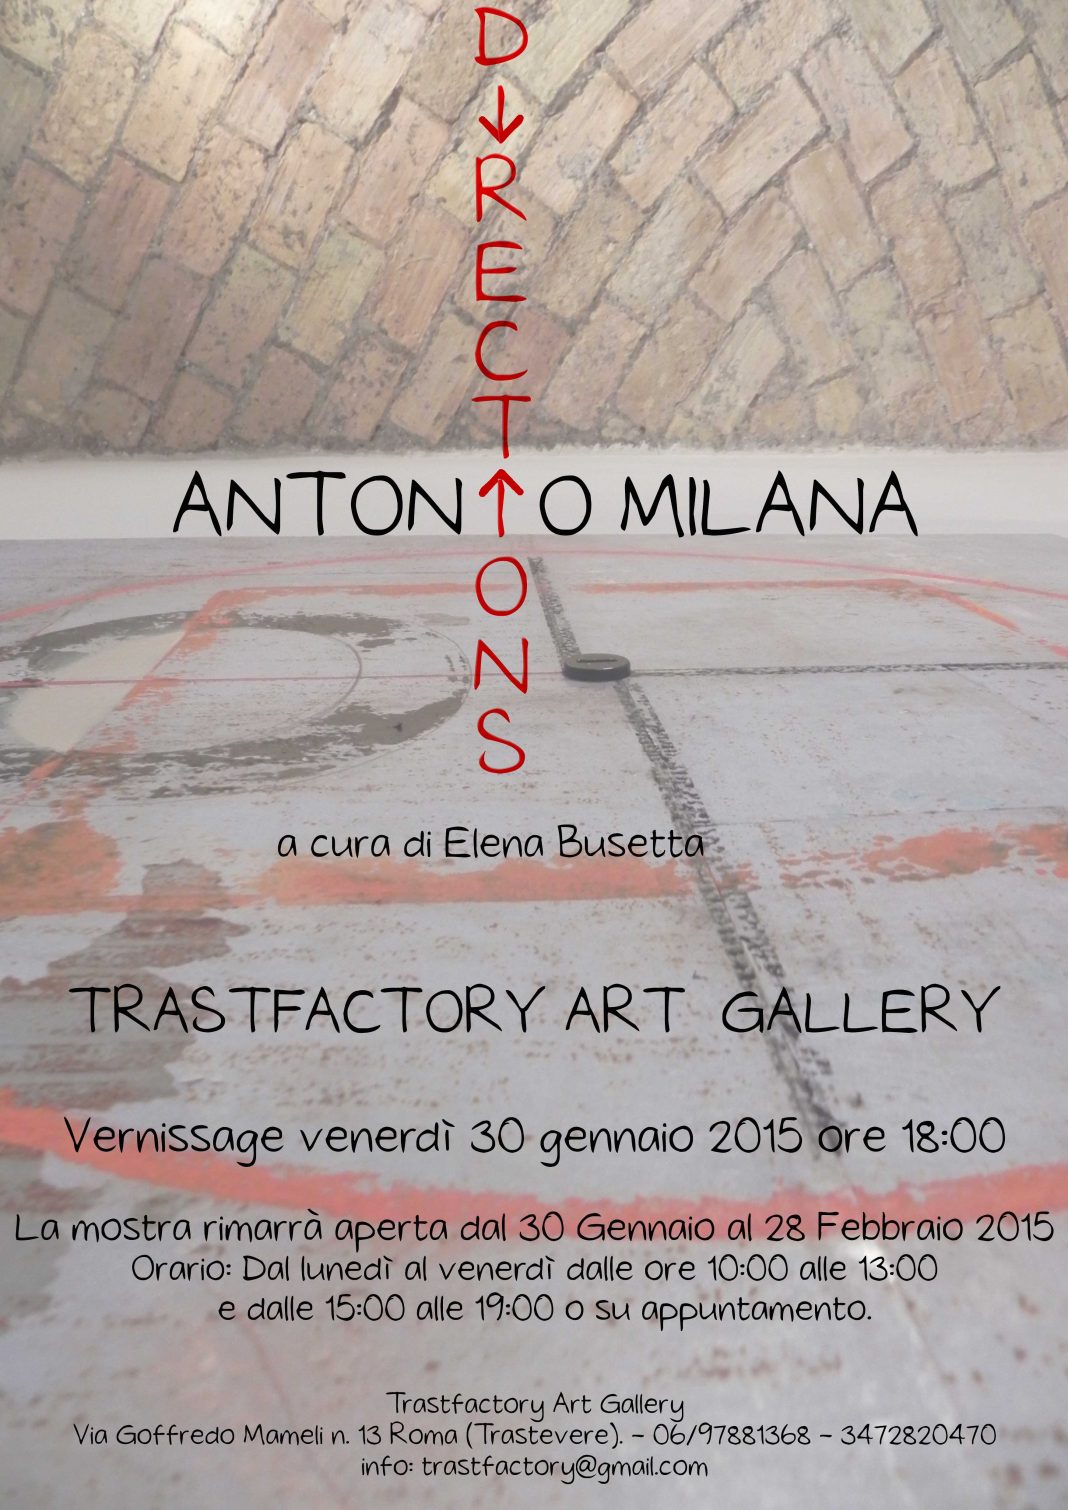 Antonio Milana – Directionshttps://www.exibart.com/repository/media/eventi/2015/01/antonio-milana-8211-directions-1068x1510.jpg